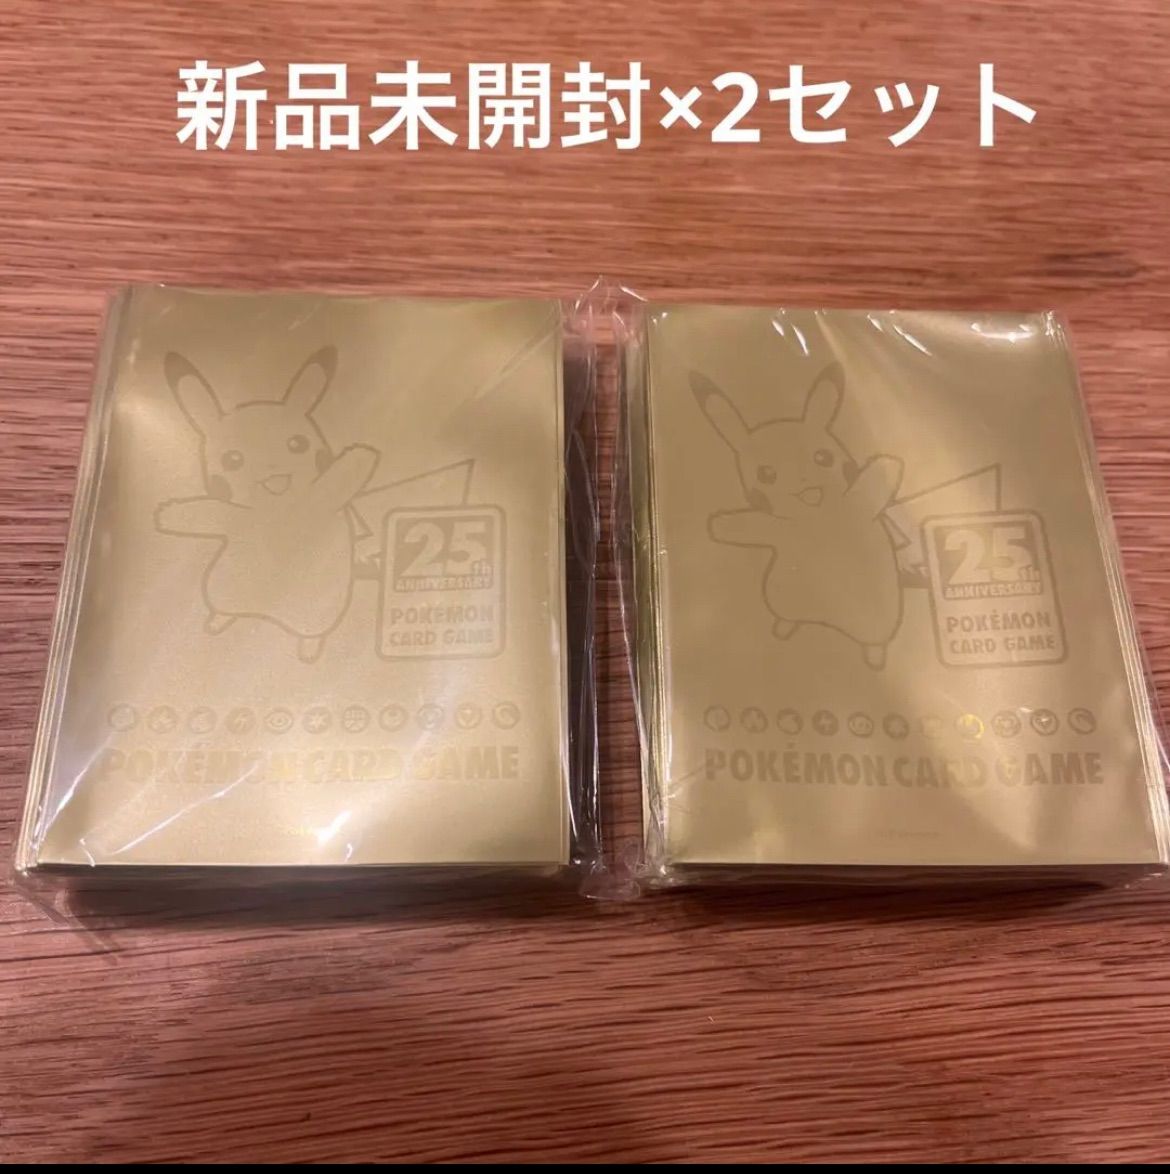 25th anniversary golden box サプライ 2セット